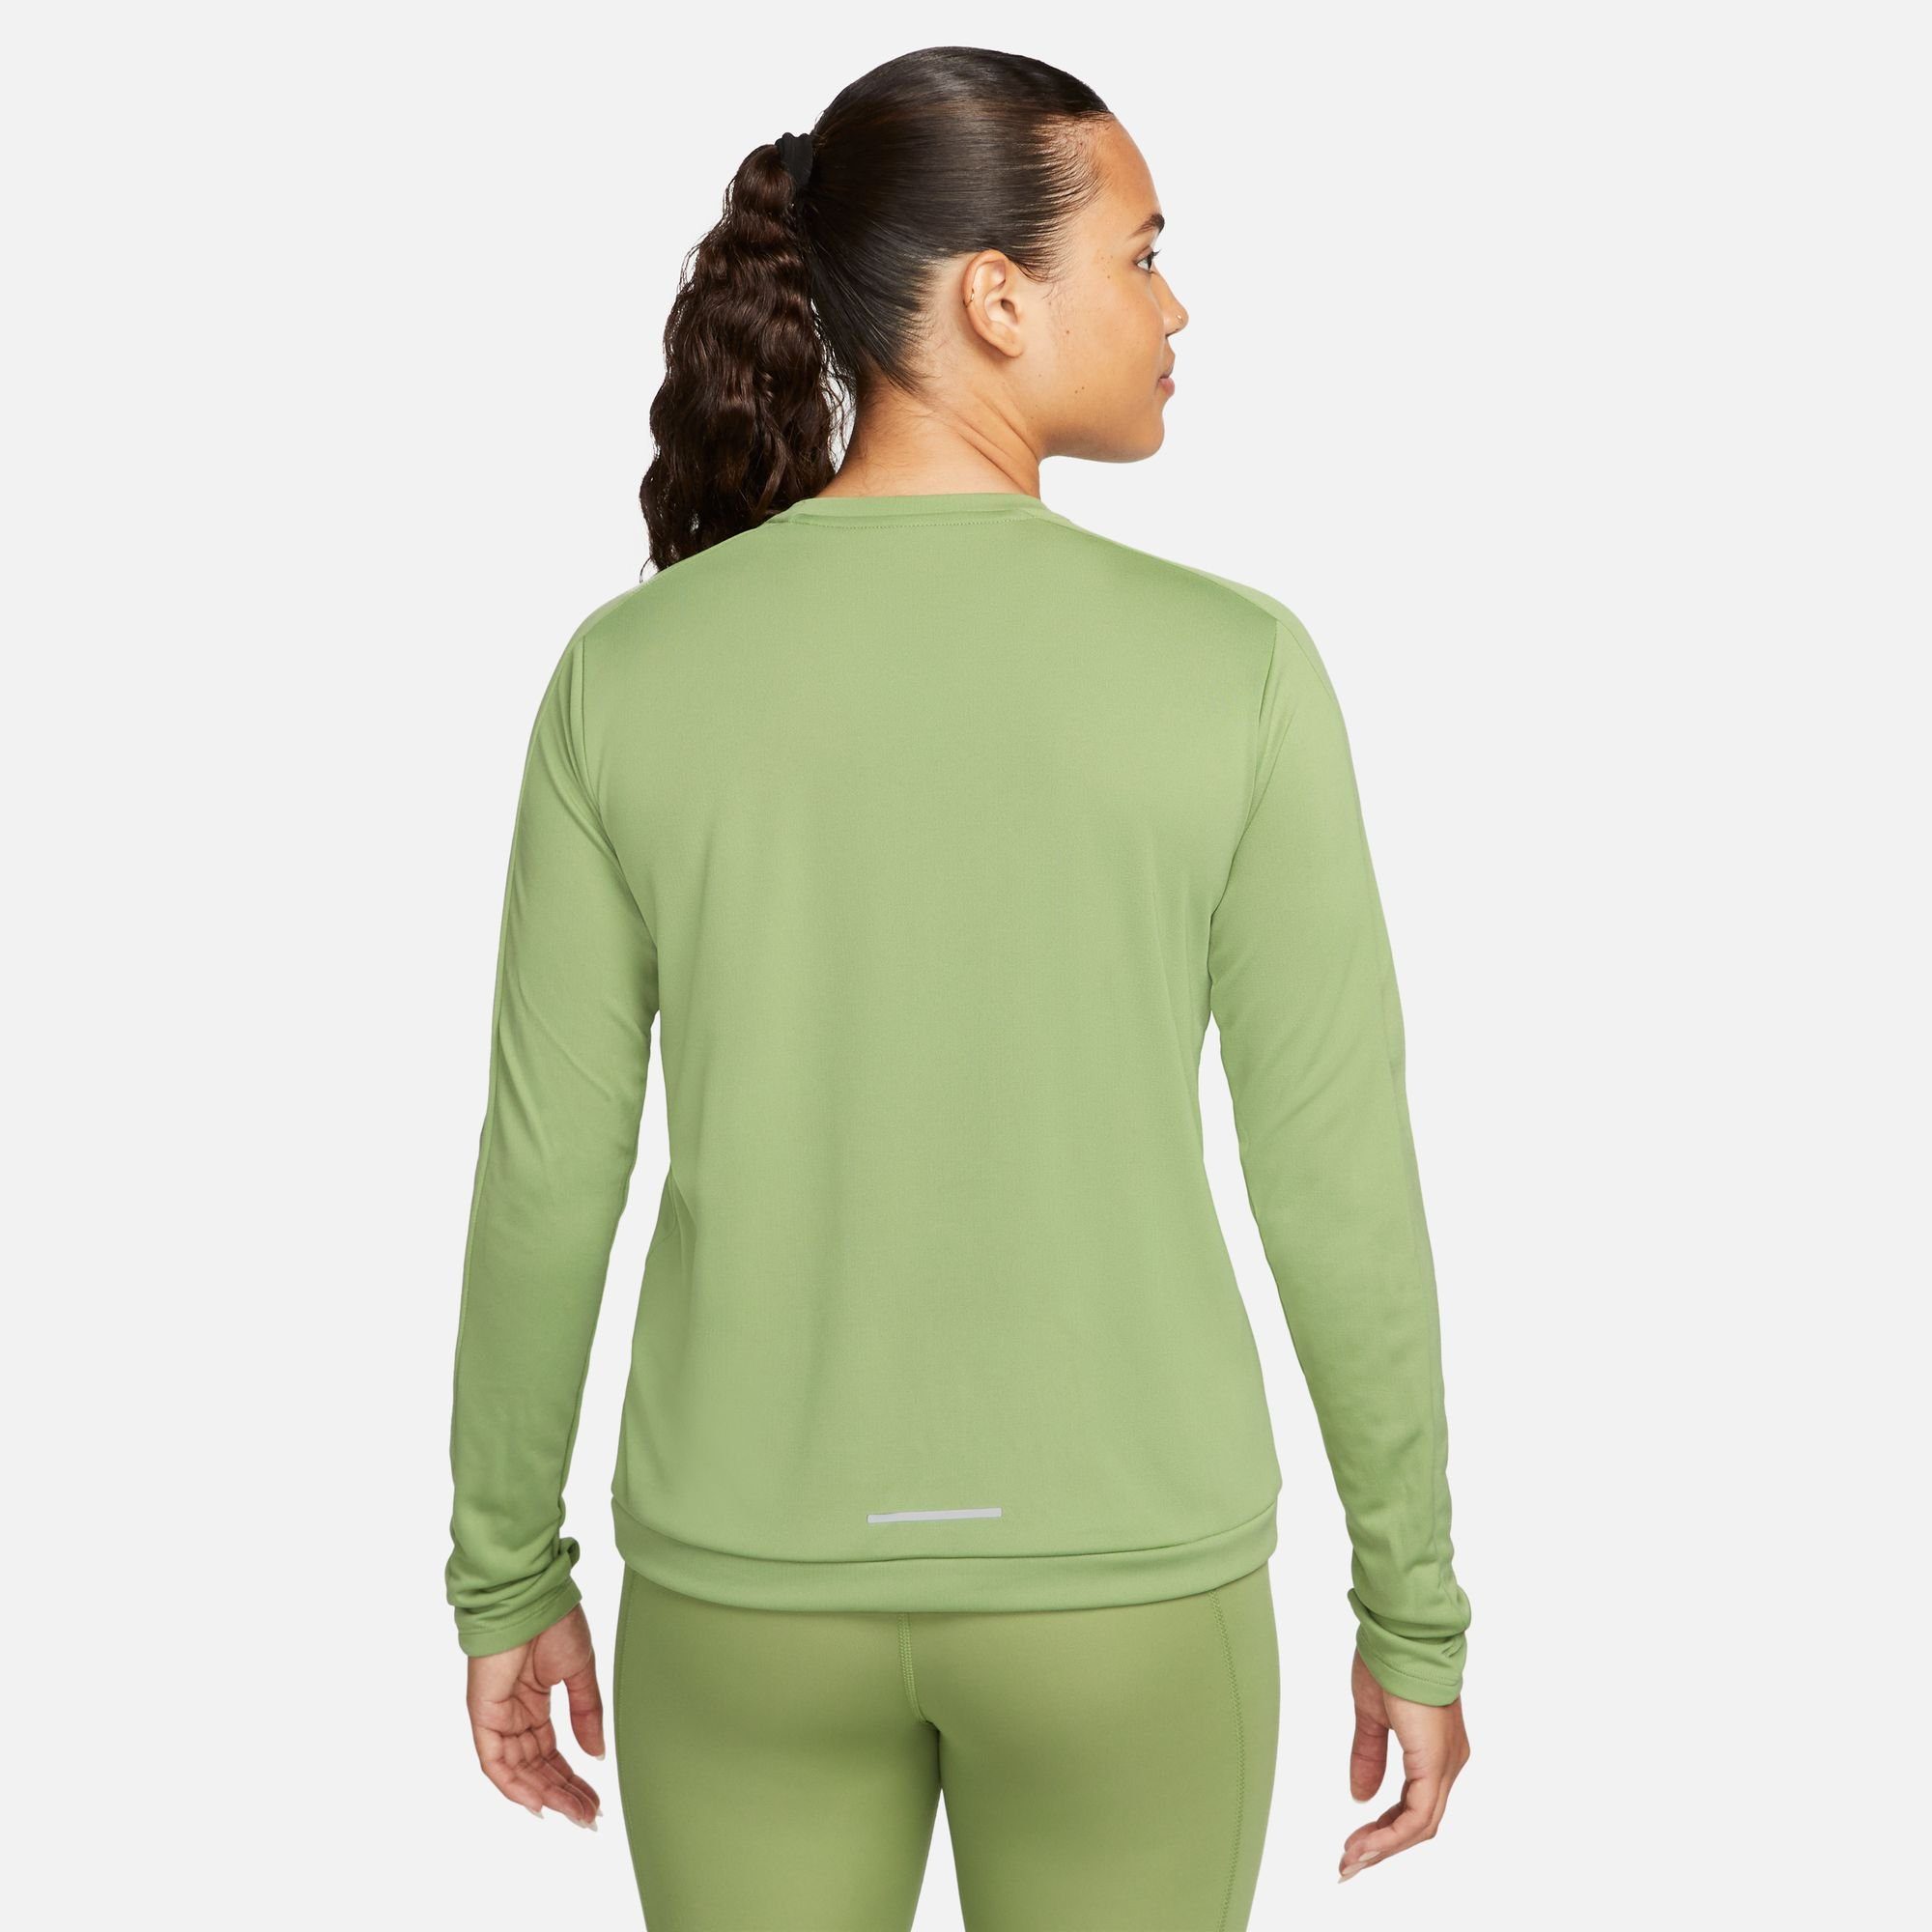 RUNNING CREW-NECK WOMEN'S Laufshirt Nike TOP grün DRI-FIT